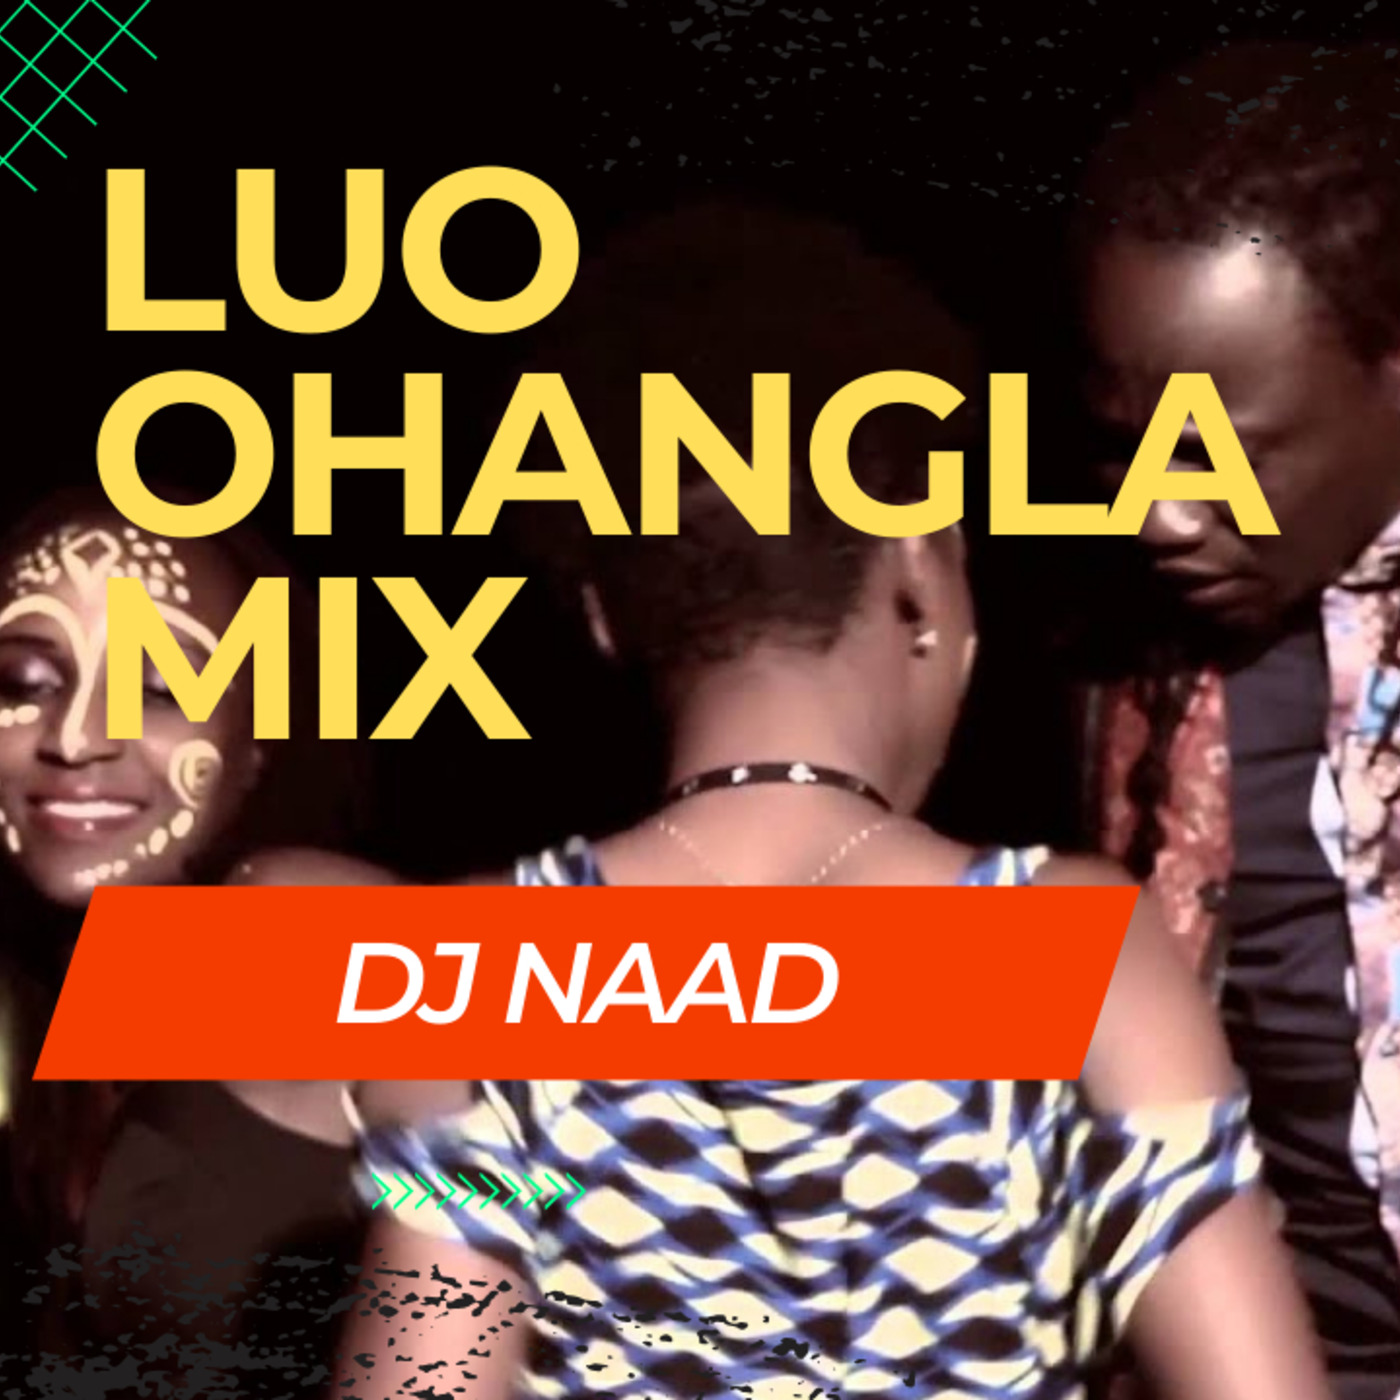 DJ Naad - Luo Ohangla Mix (Video mix on Youtube) - Prince Indah, Elisha Toto, Kaka Talanta, Musa Jakadala, Odongo Swag